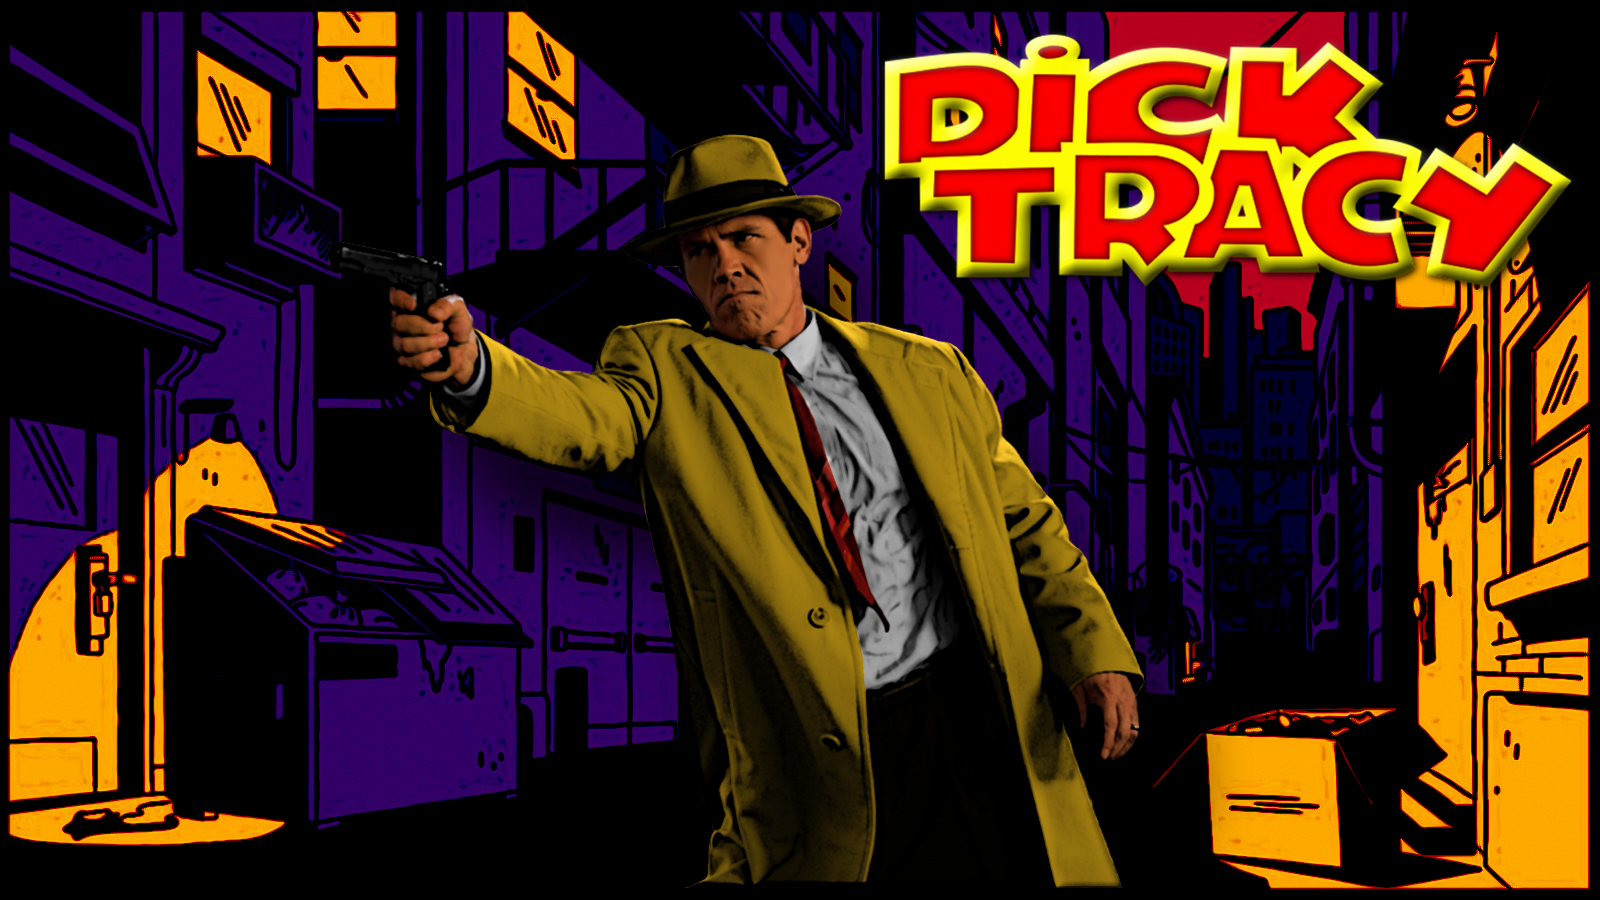 Dick Tracy Wp By Swfan1977 Customization Wallpaper Photo Manipulated